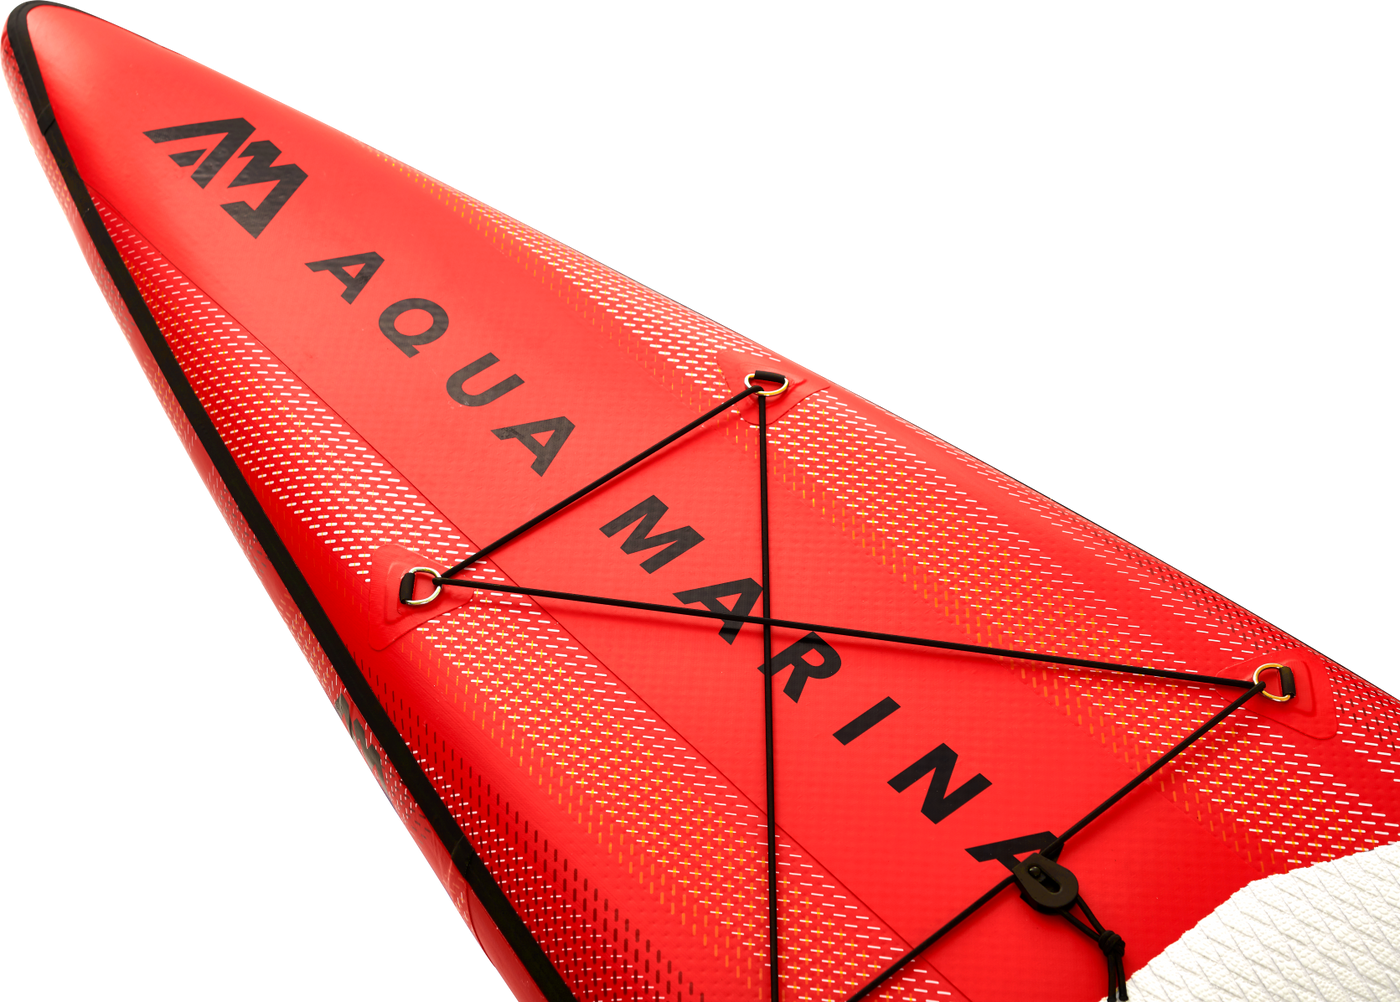 Aqua Marina 2020 Race 12'6" Inflatable SUP Kit